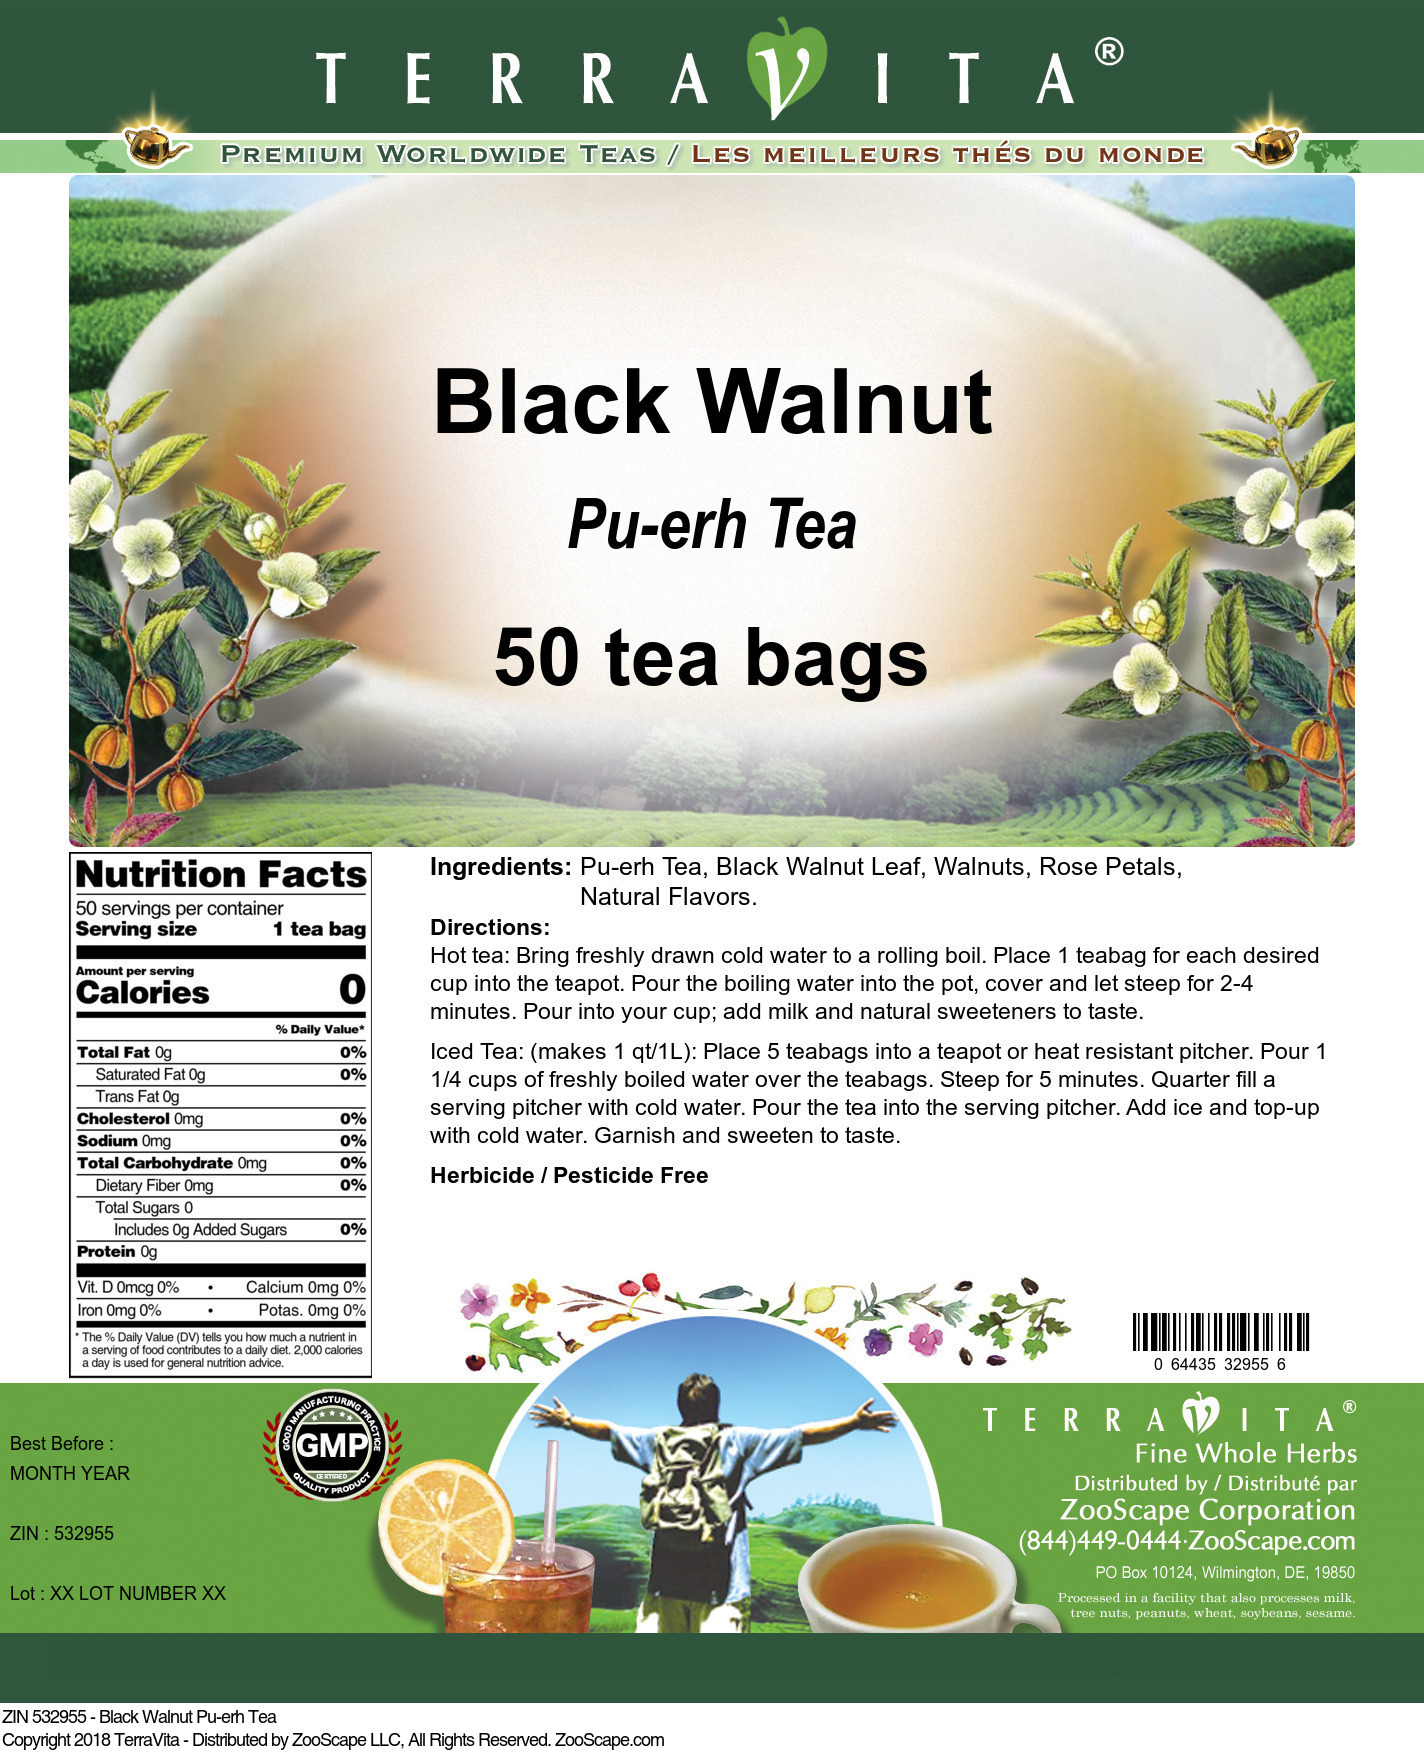 Black Walnut Pu-erh Tea - Label